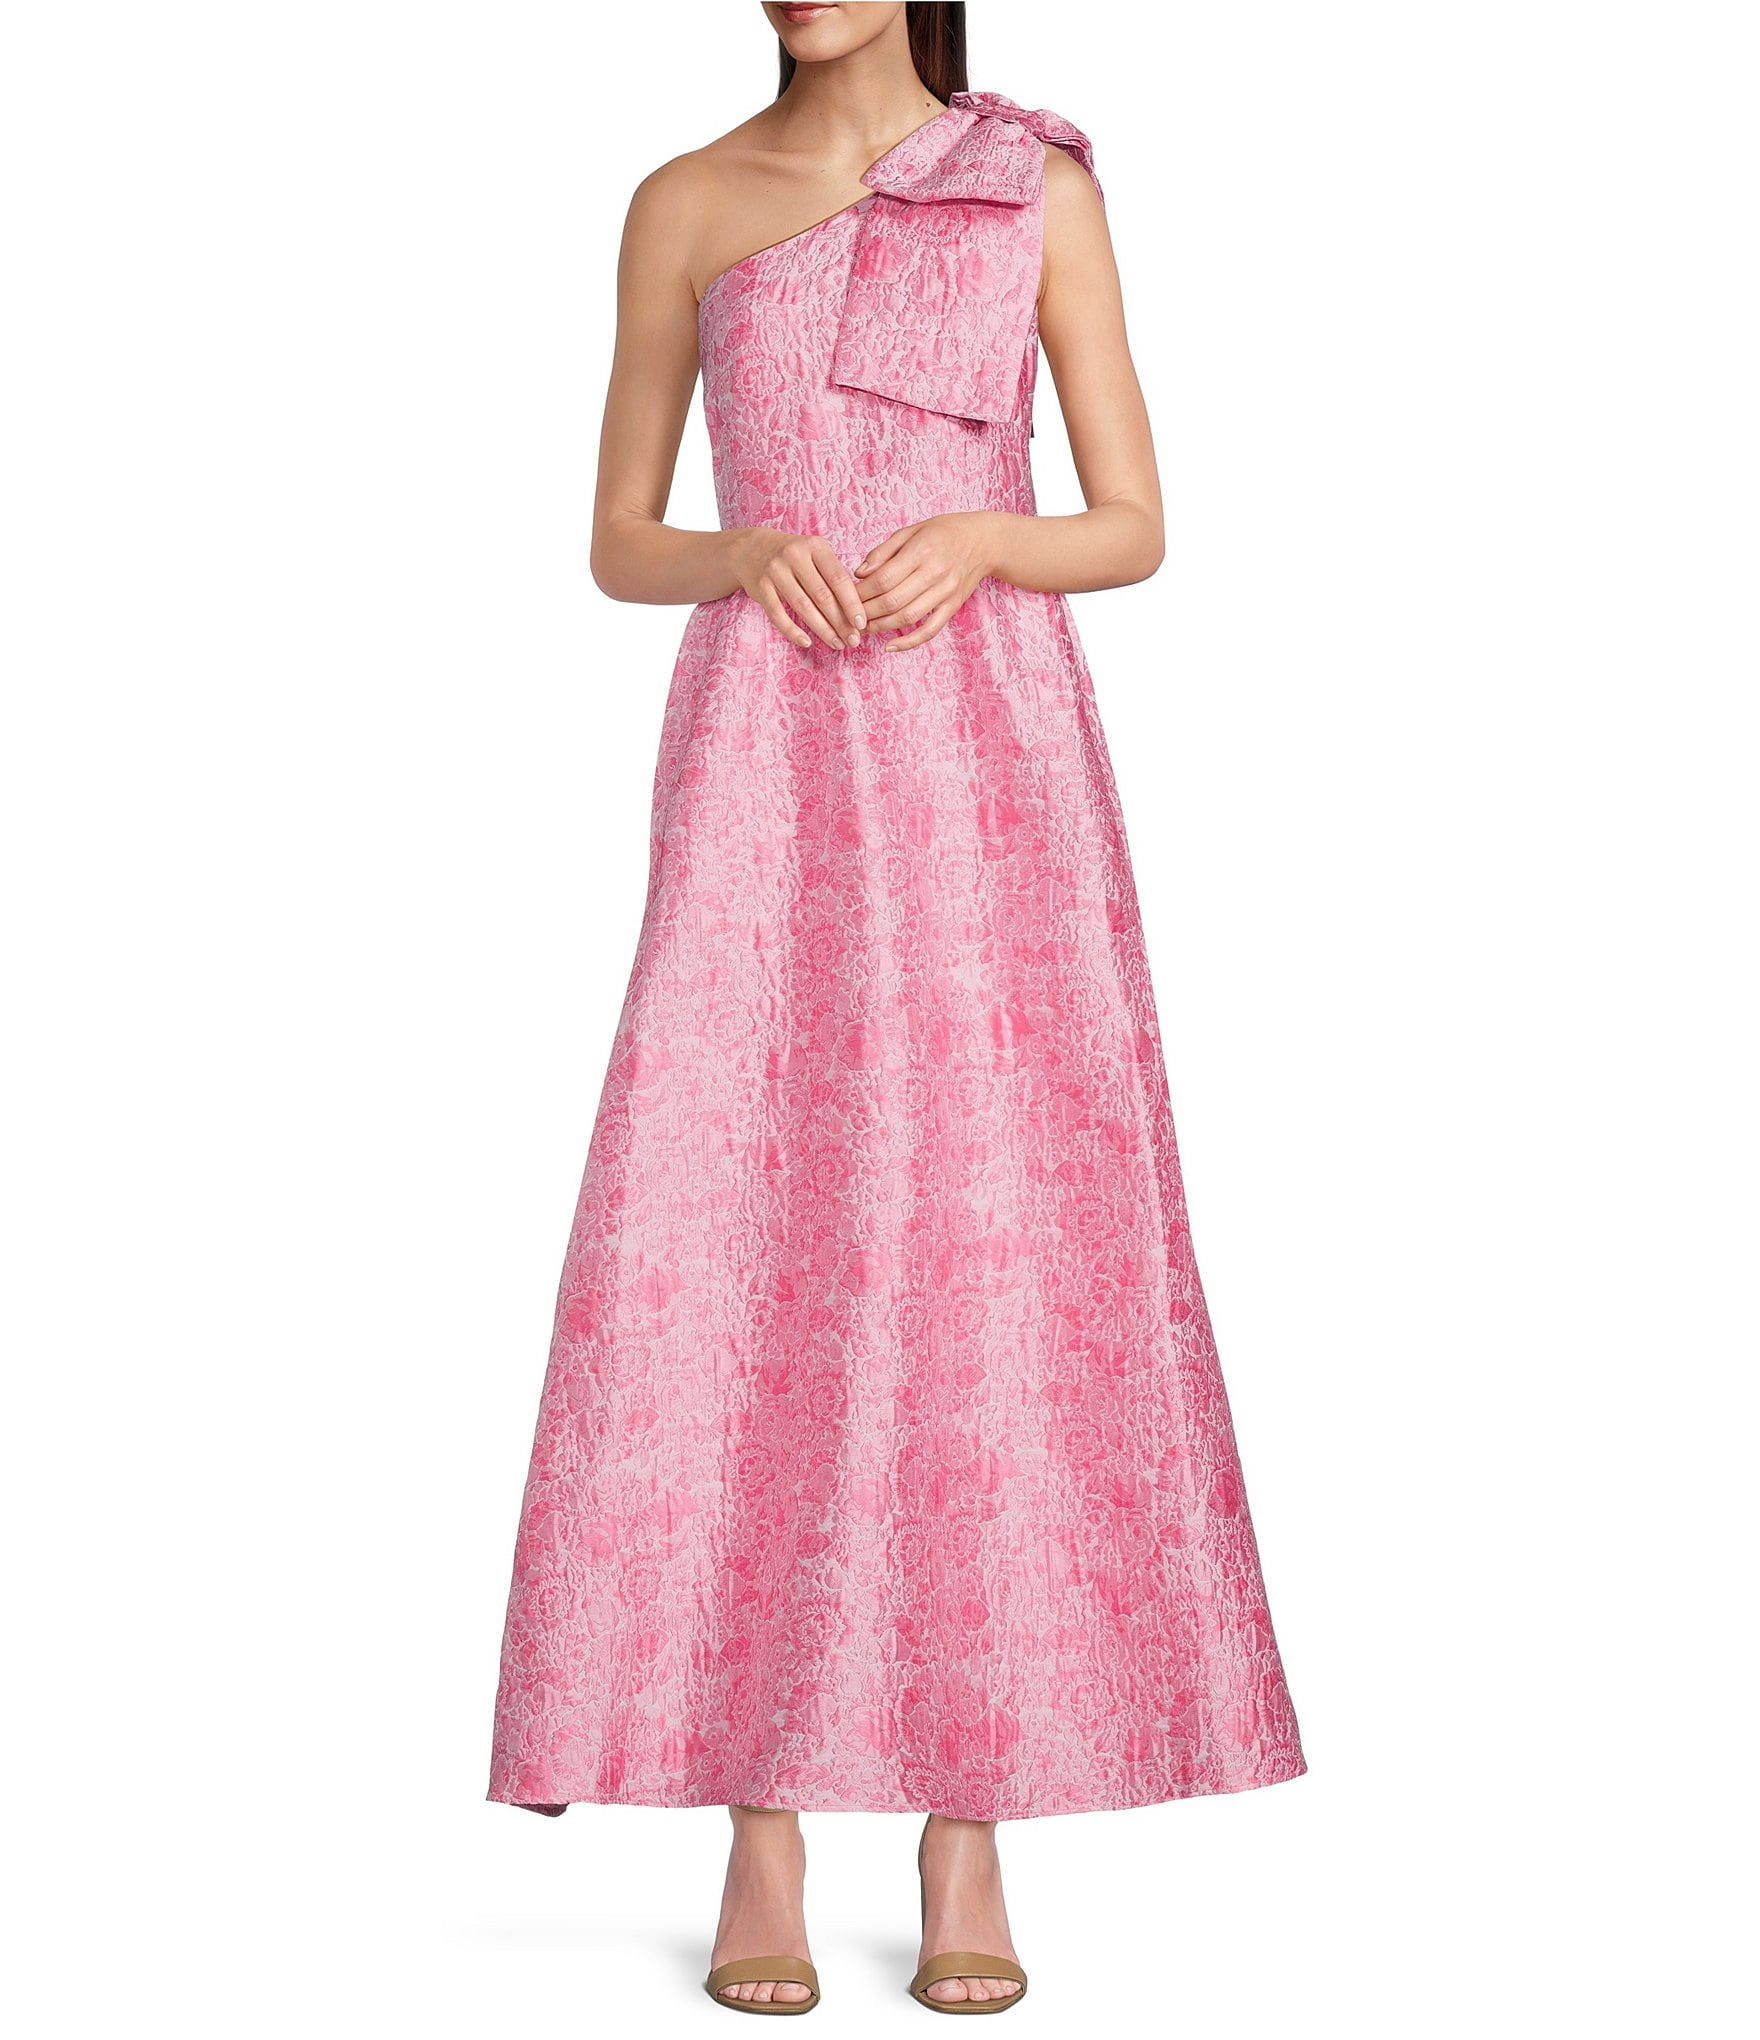 size 24 dresses: Women's Formal Dresses & Evening Gowns | Dillard's